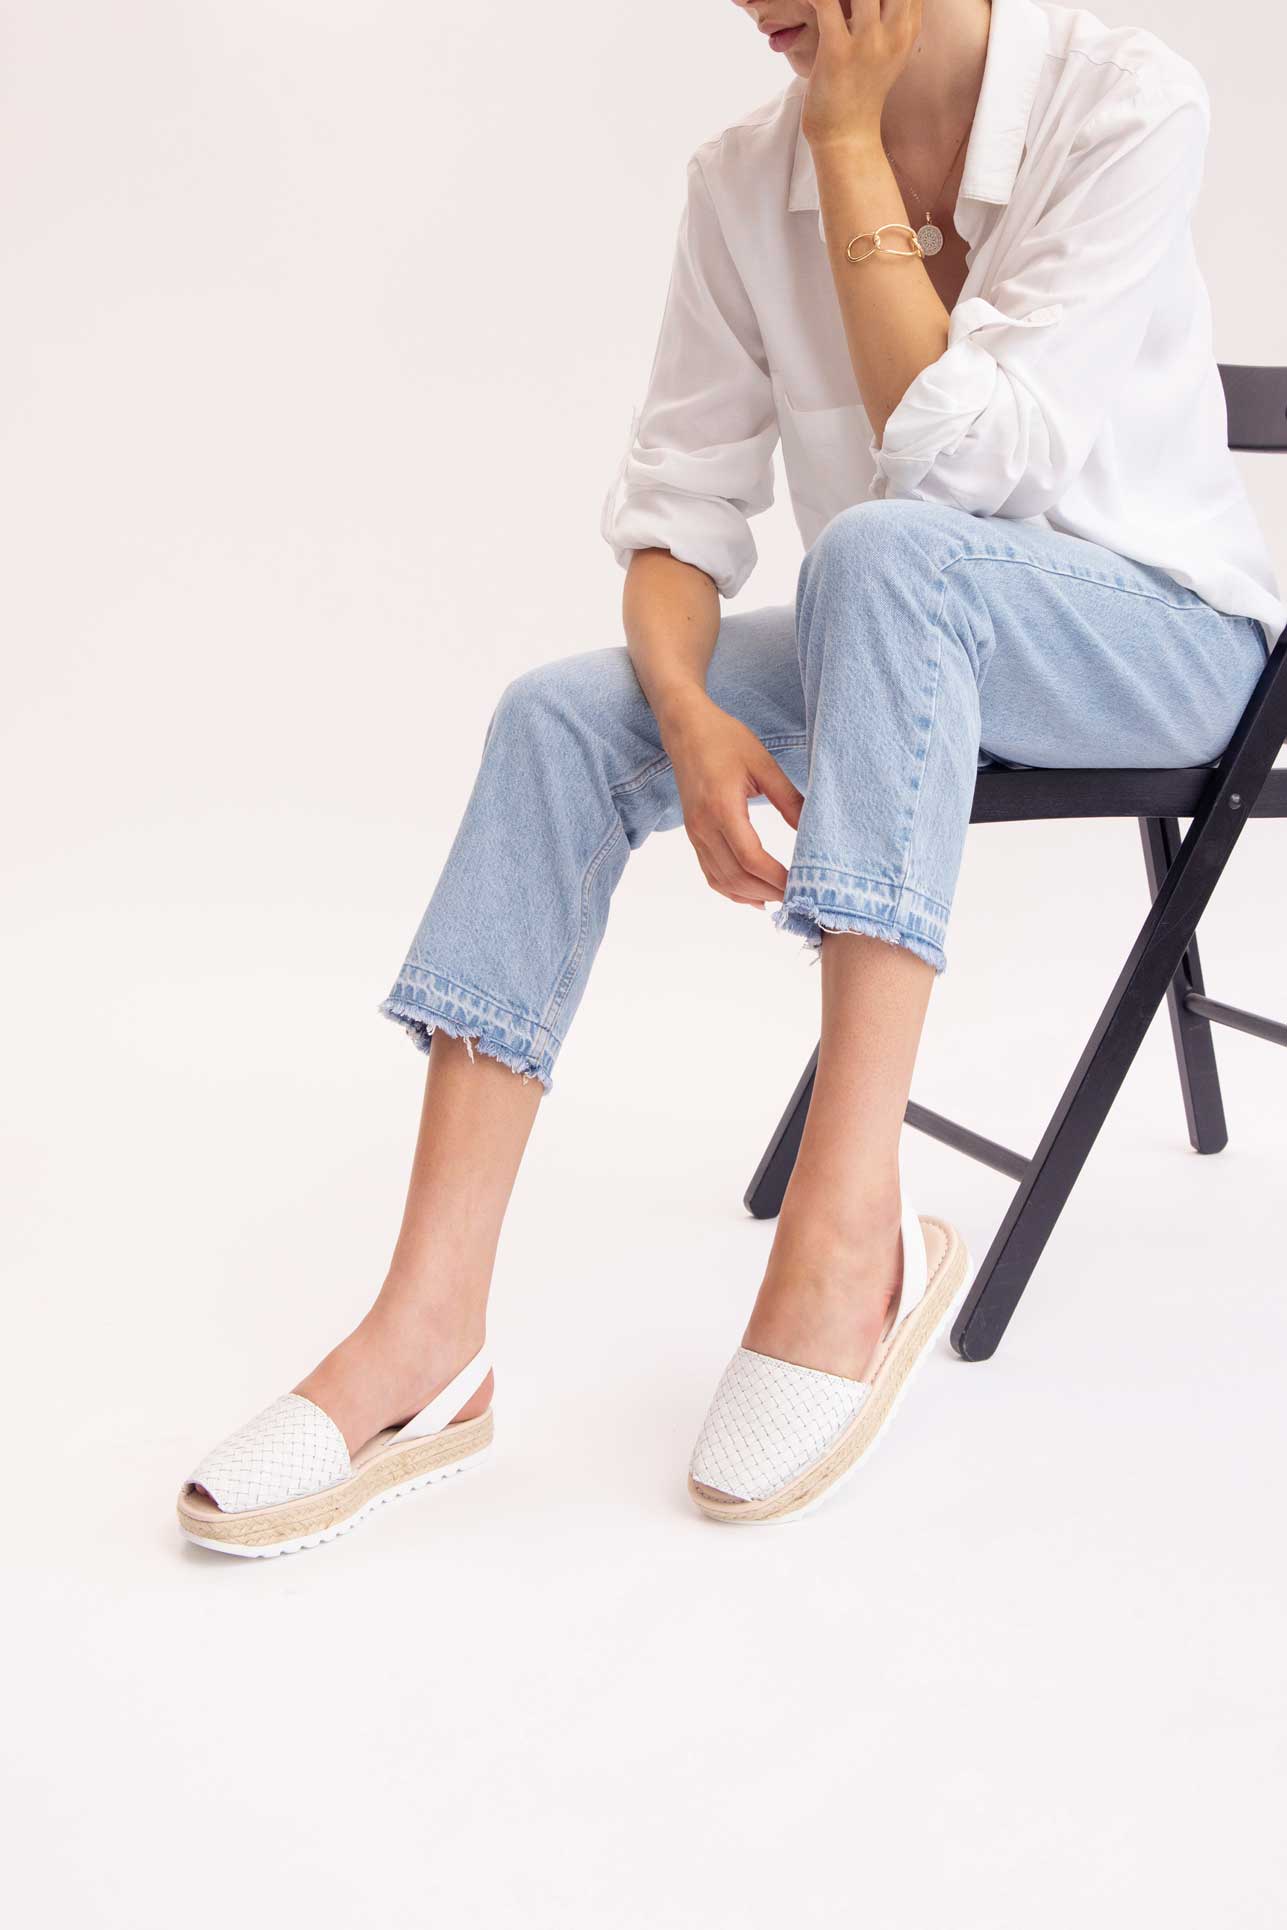 BLANCO CARME - Espadrille Flatform White Woven Leather Menorcan Sandals